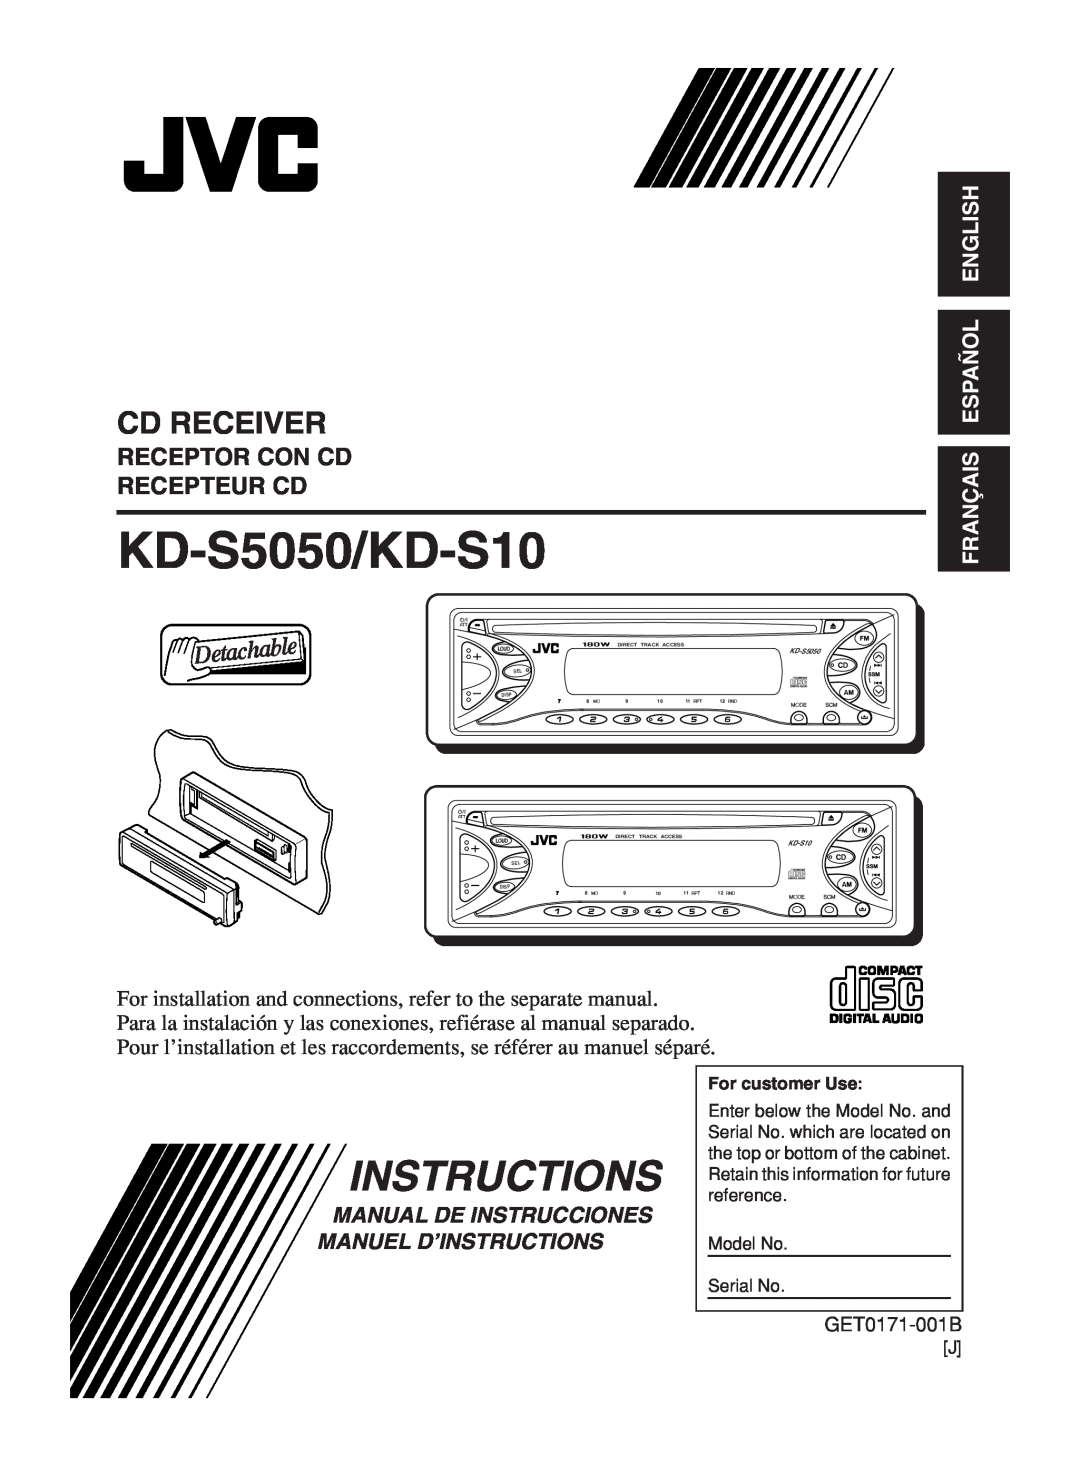 JVC manual Cd Receiver, Receptor Con Cd Recepteur Cd, Français Español English, KD-S5050/KD-S10, Instructions 